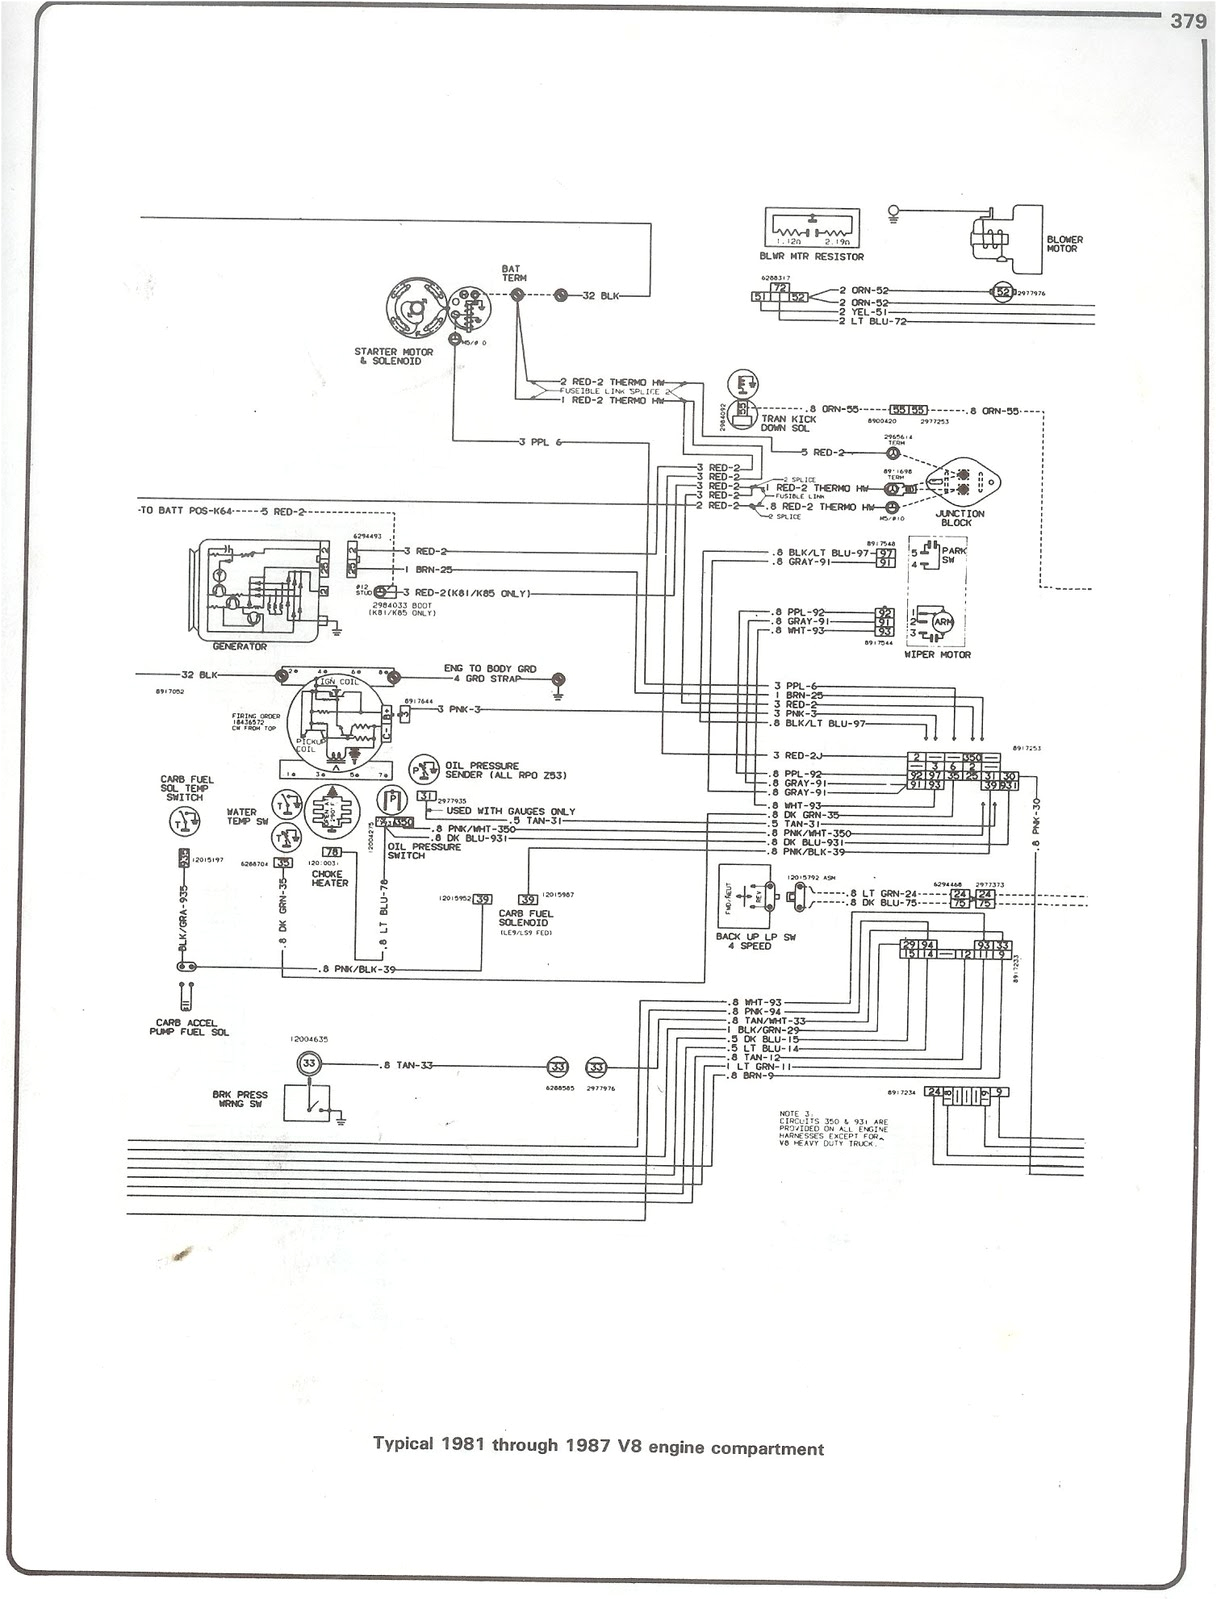 1975 gmc truck engine compartment diagram wiring diagram note 1989 chevy truck engine diagram chevy truck engine diagram